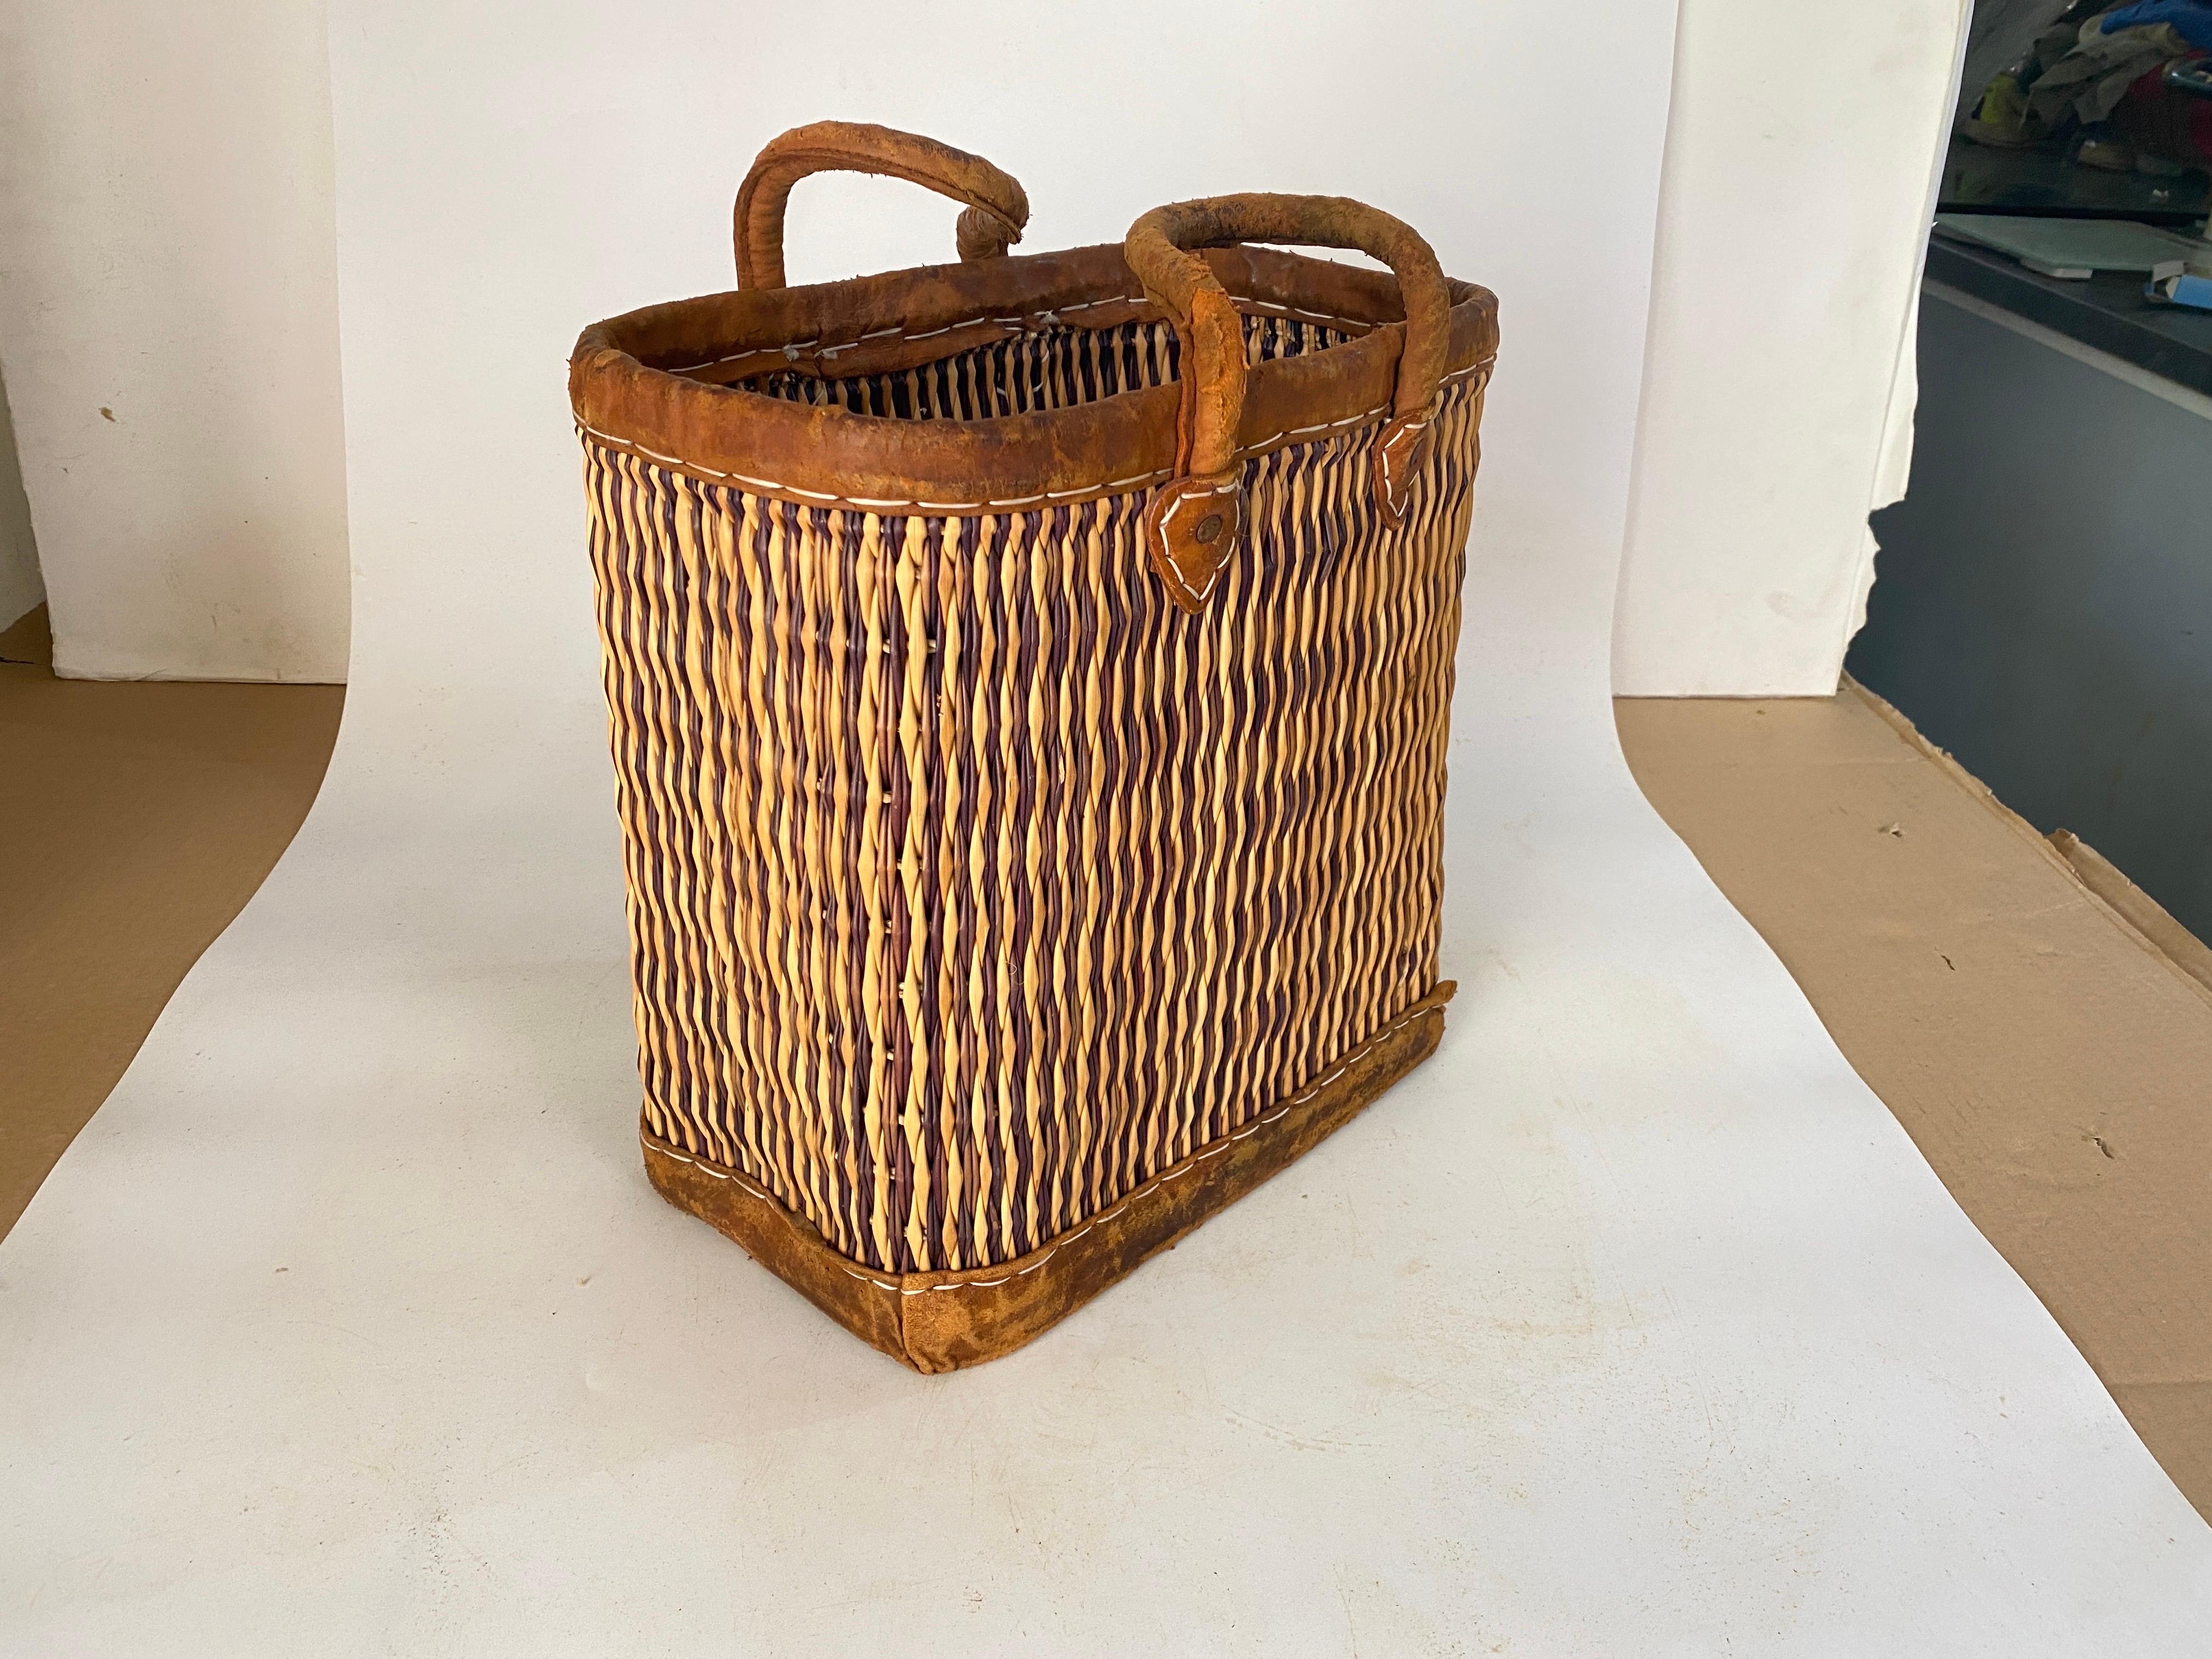 Vintage French Wicker Basket, Gold Color Stitched Leather Bag Handles France For Sale 15